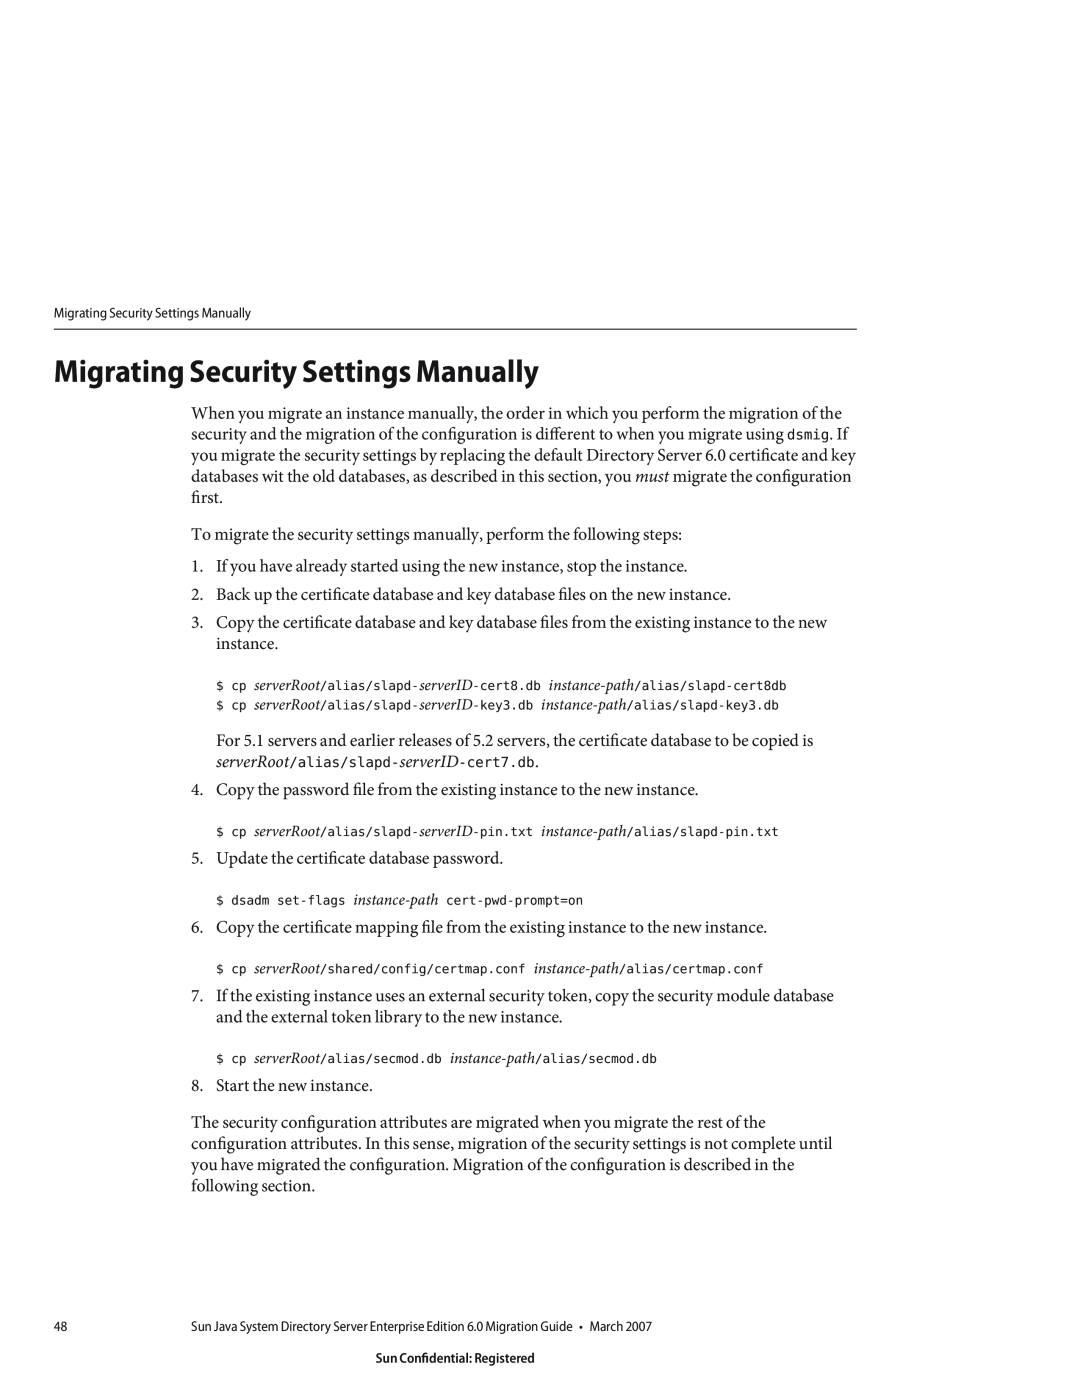 Sun Microsystems 8190994 manual Migrating Security Settings Manually 